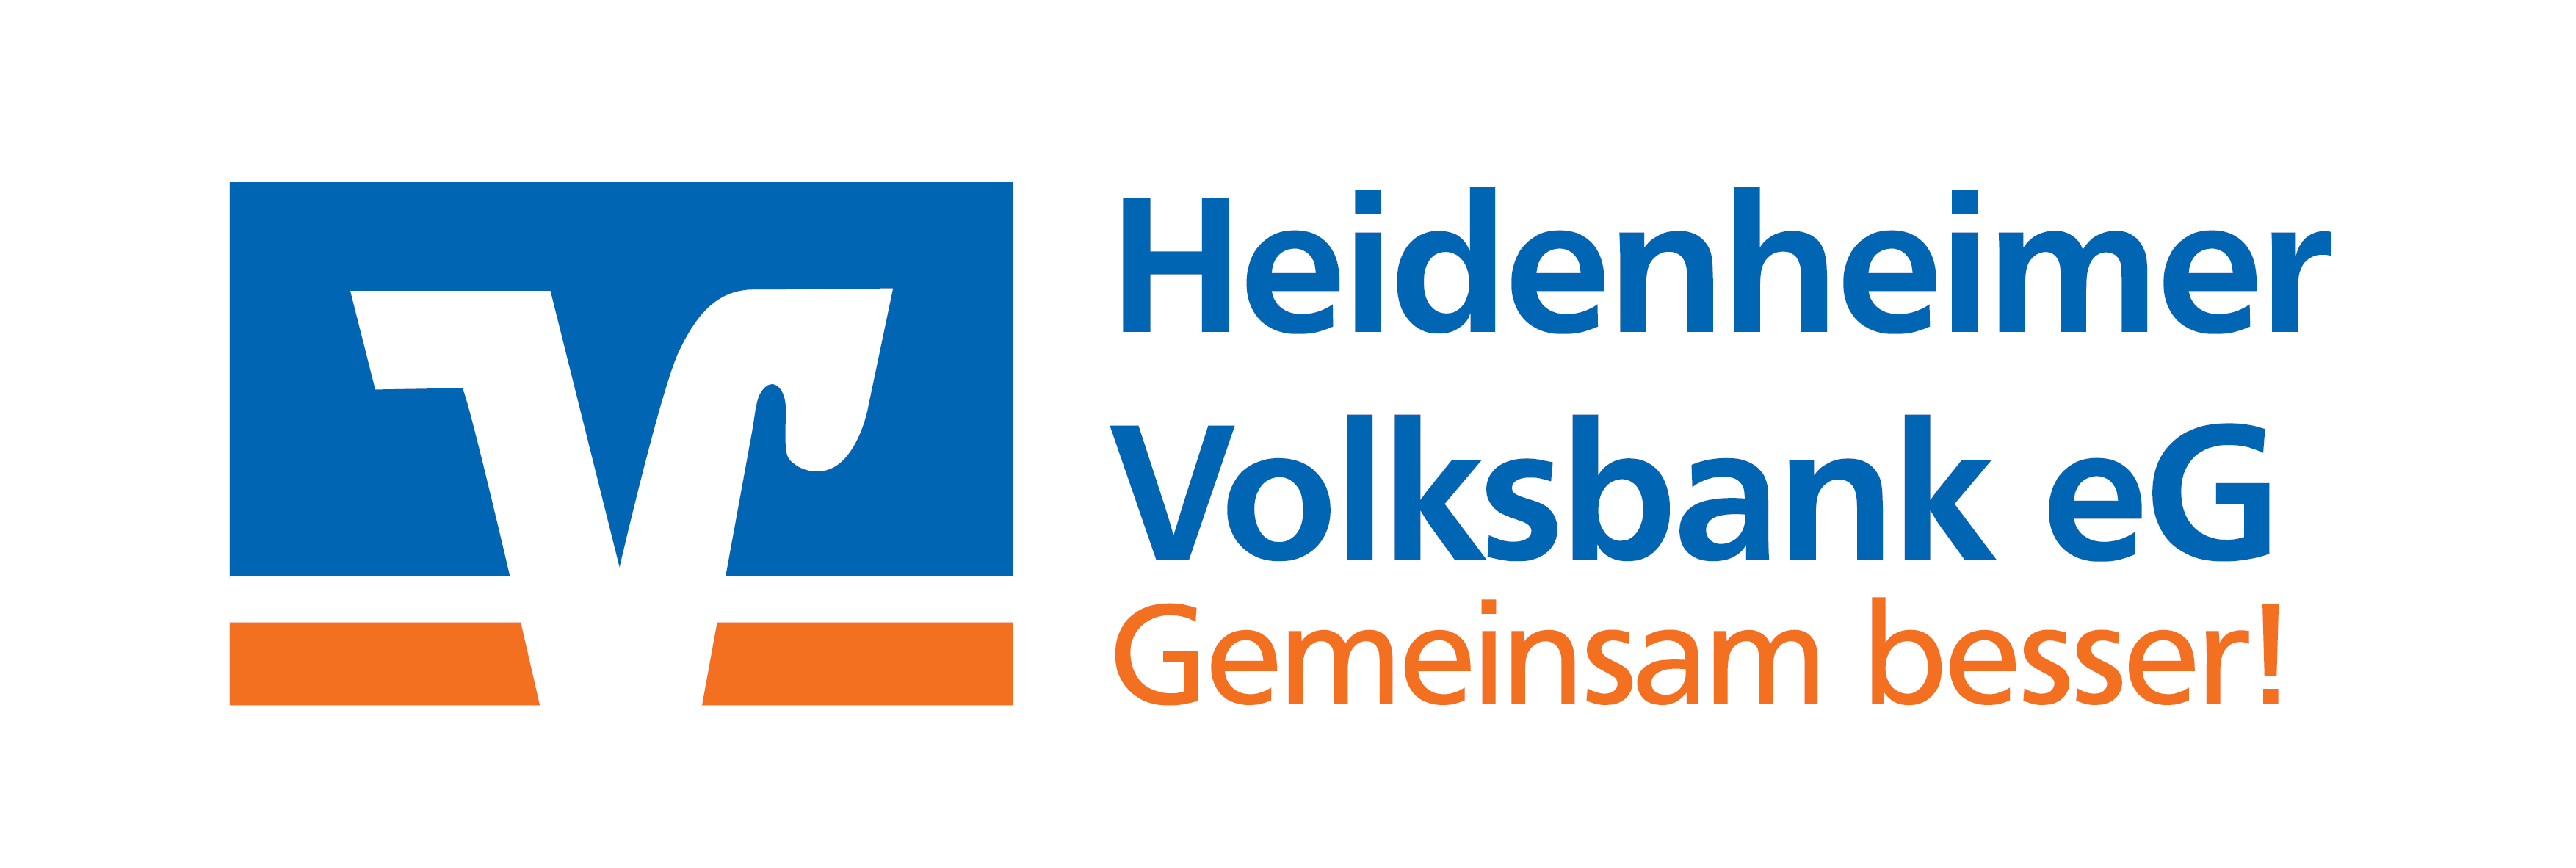 Heidenheimer Volksbank   logo